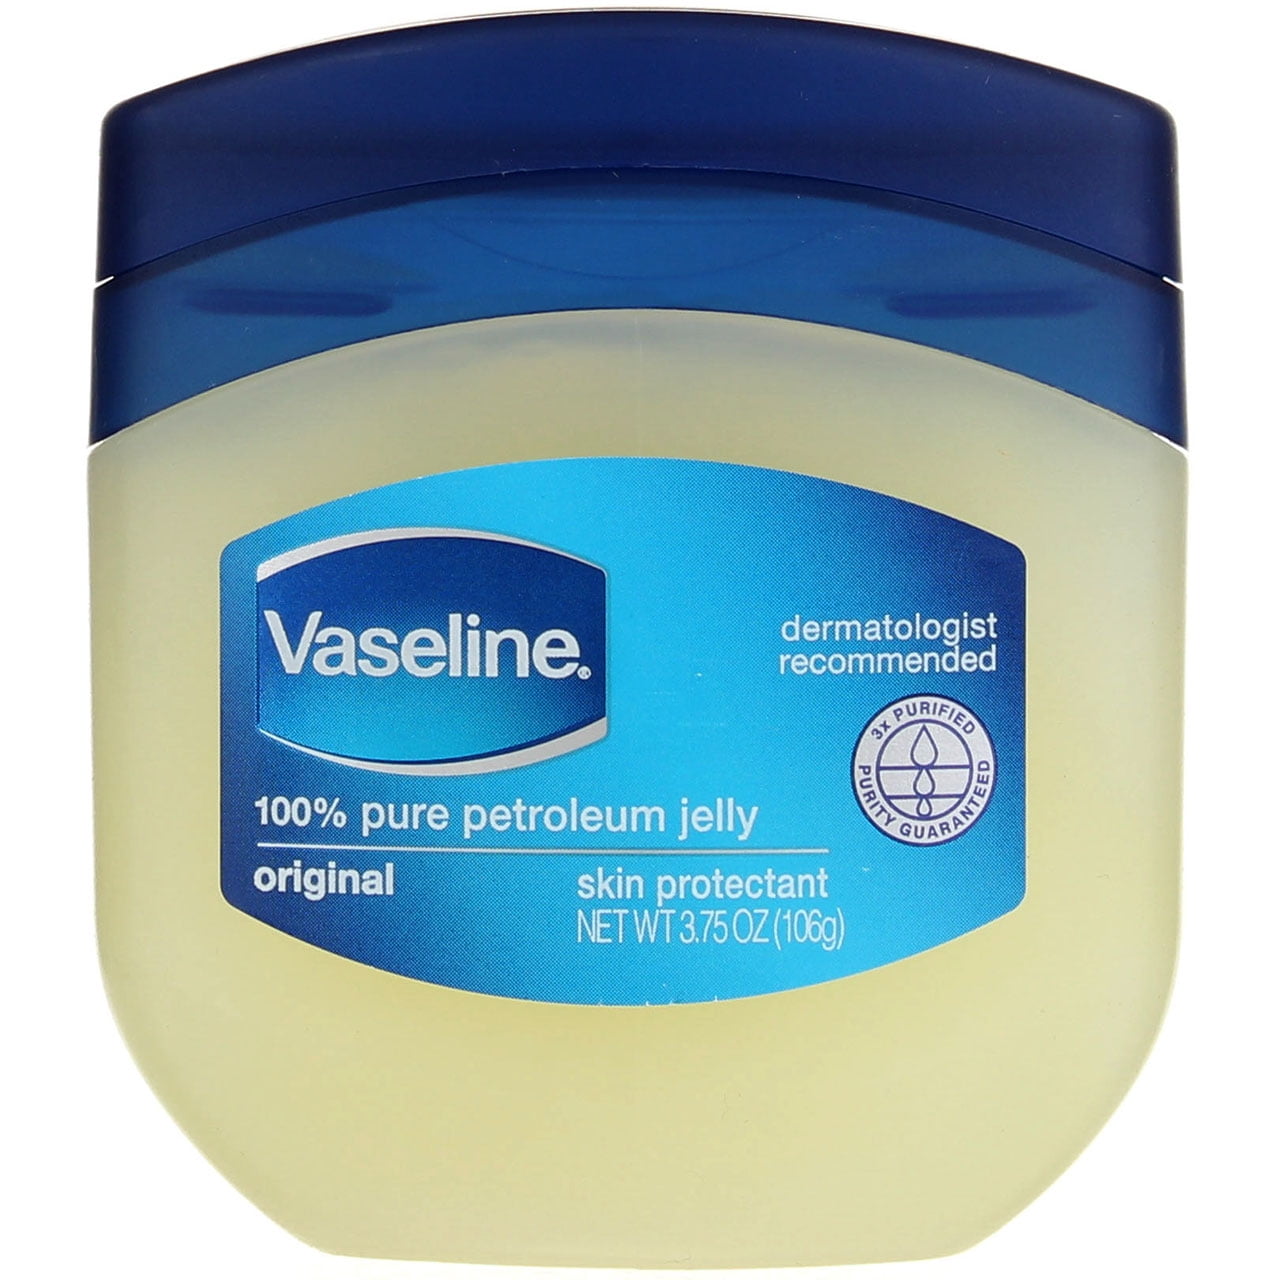 Vaseline 100% Pure Petroleum Jelly 13 oz (Pack of 6)